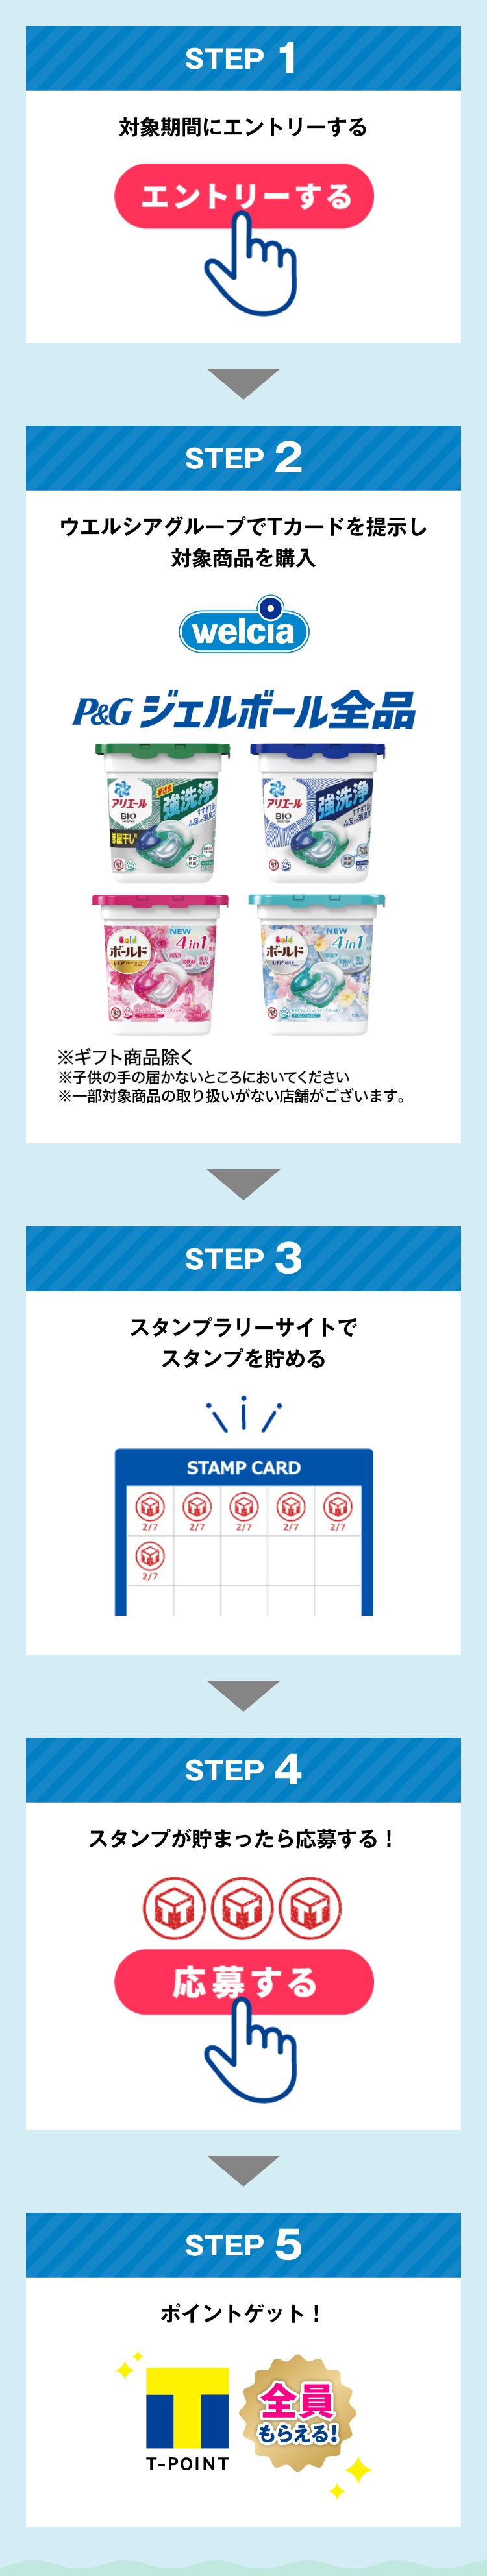 STEP1〜5